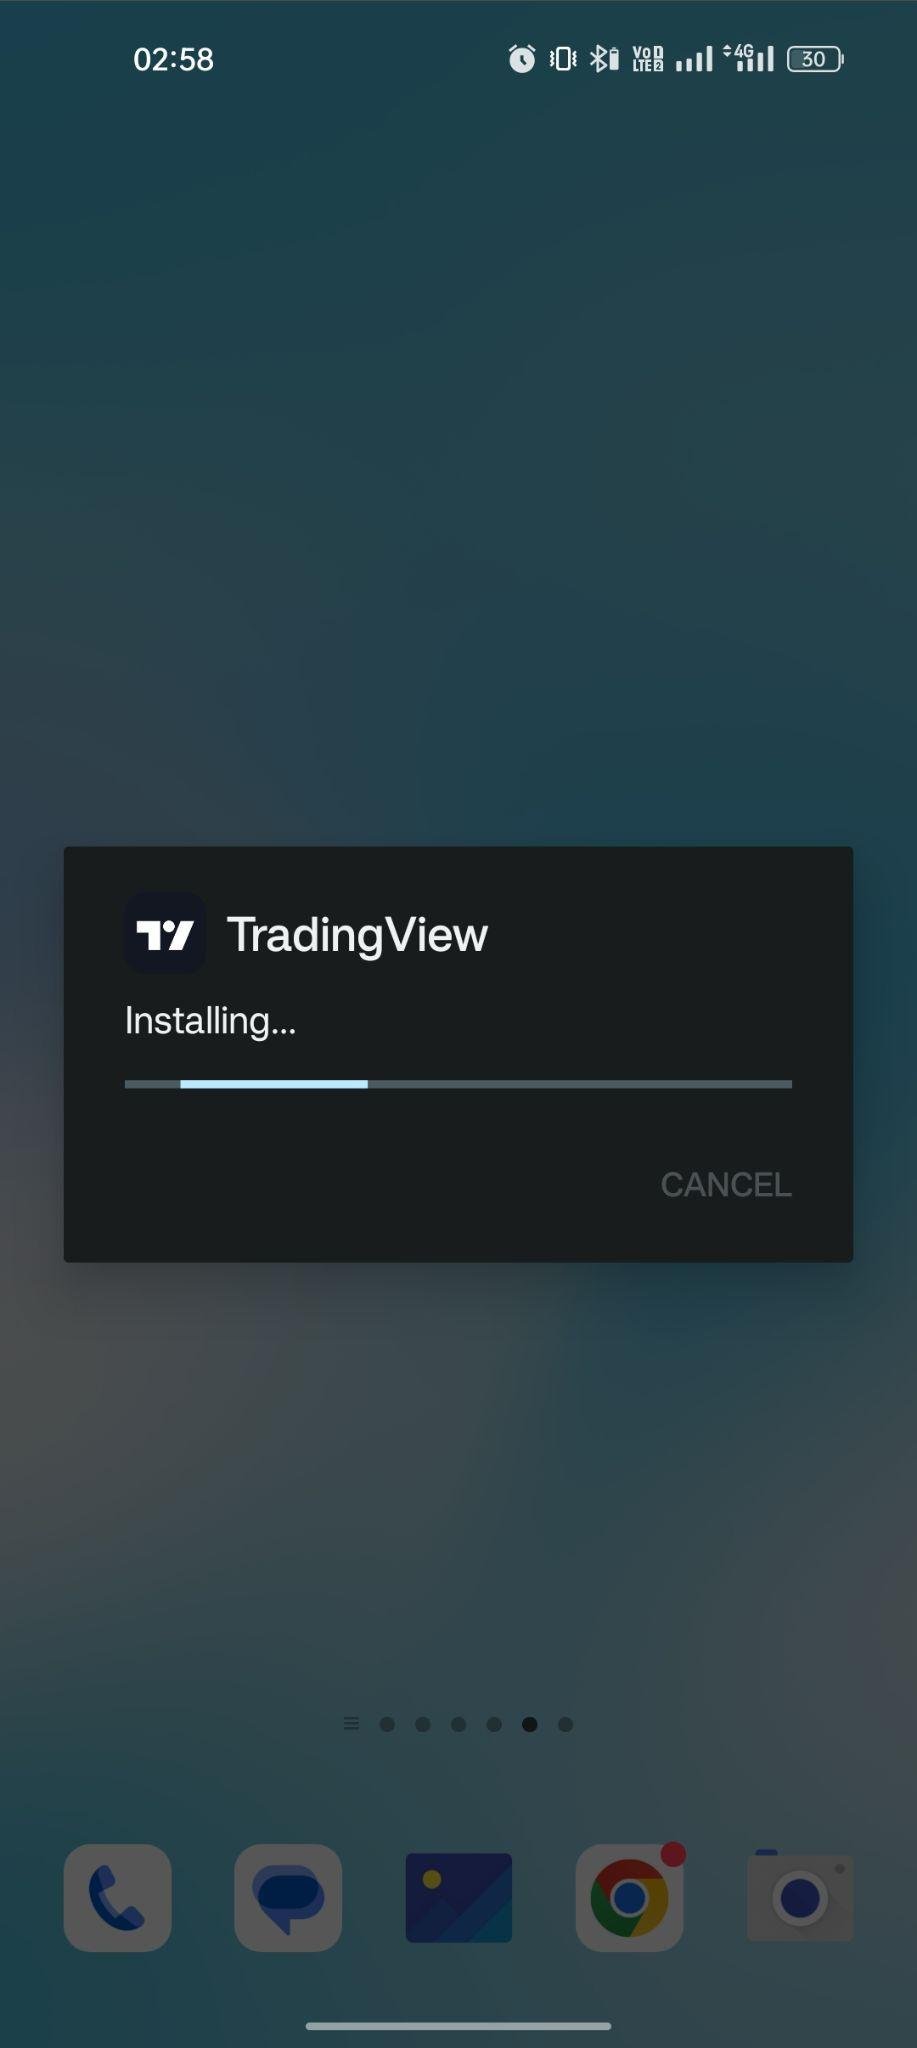 TradingView apk installing